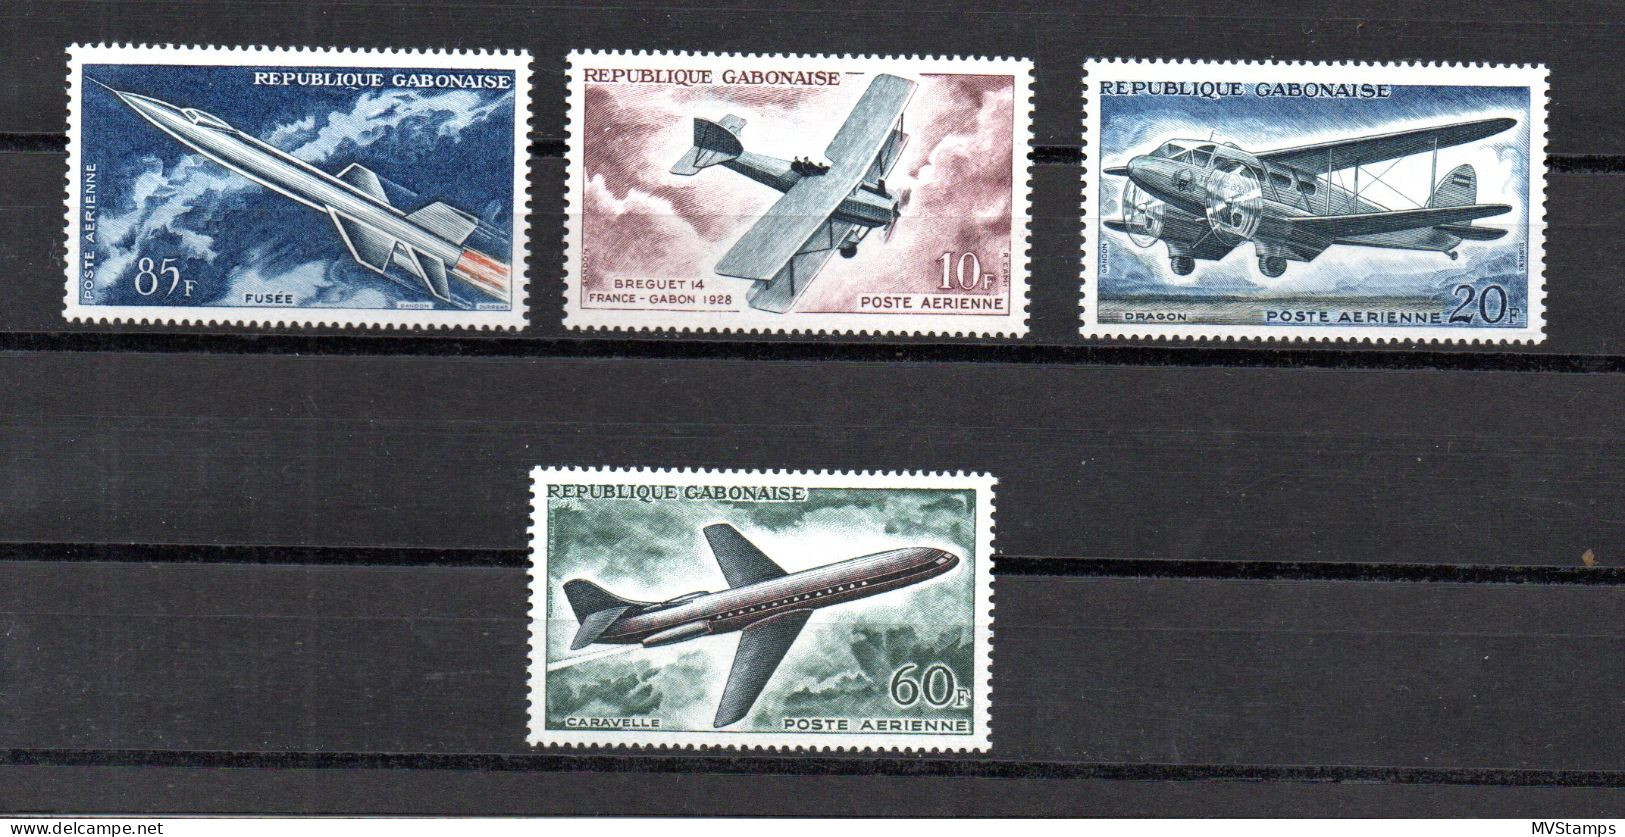 Gabon 1962 Set Aviation/Planes Airmail-stamps (Michel 175/78) MNH - Gabon (1960-...)